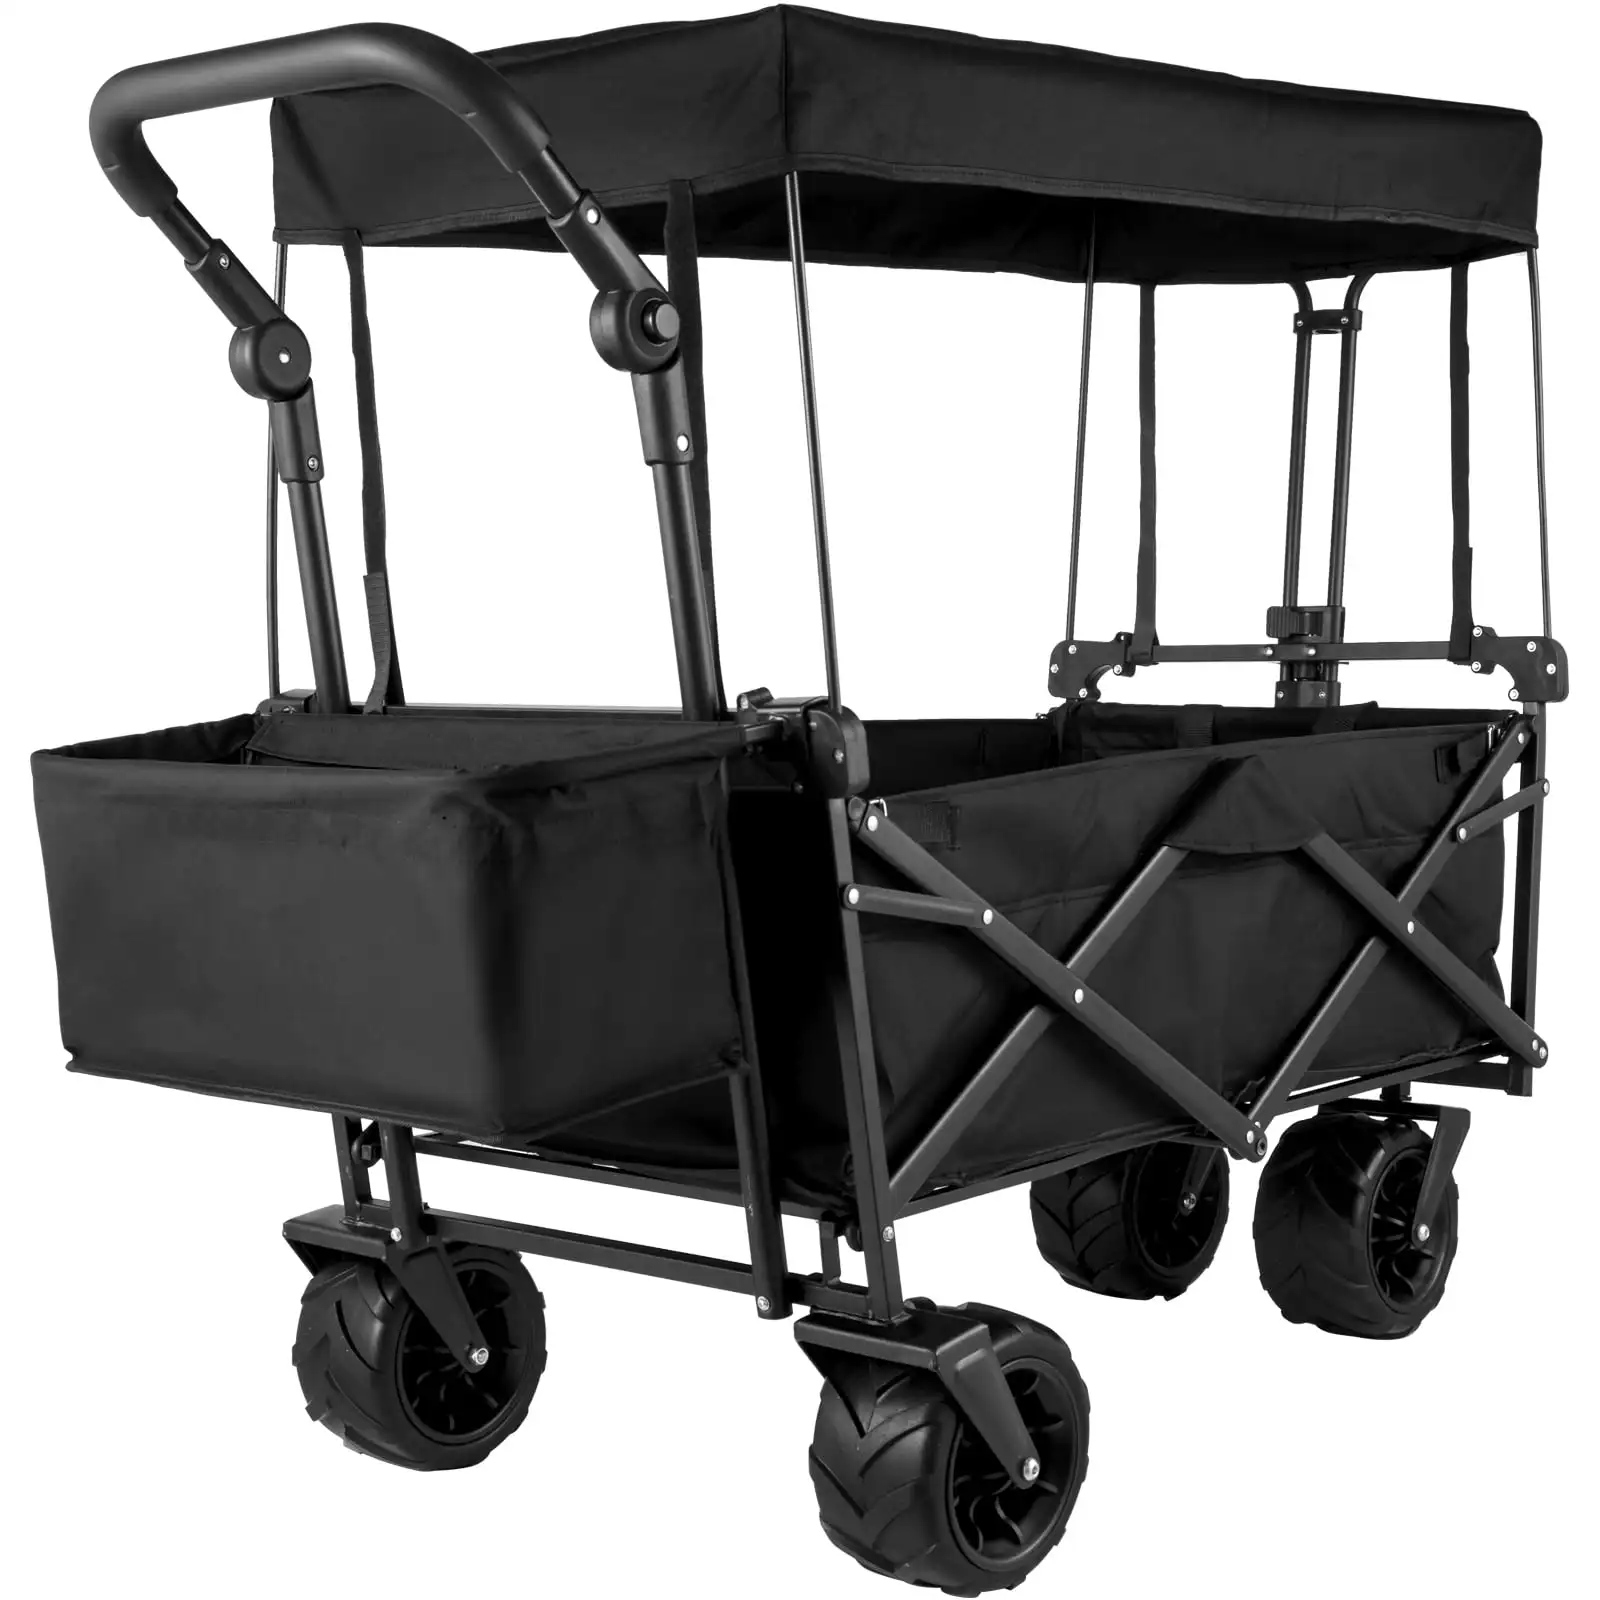 VEVORbrand Collapsible Wagon Cart Black